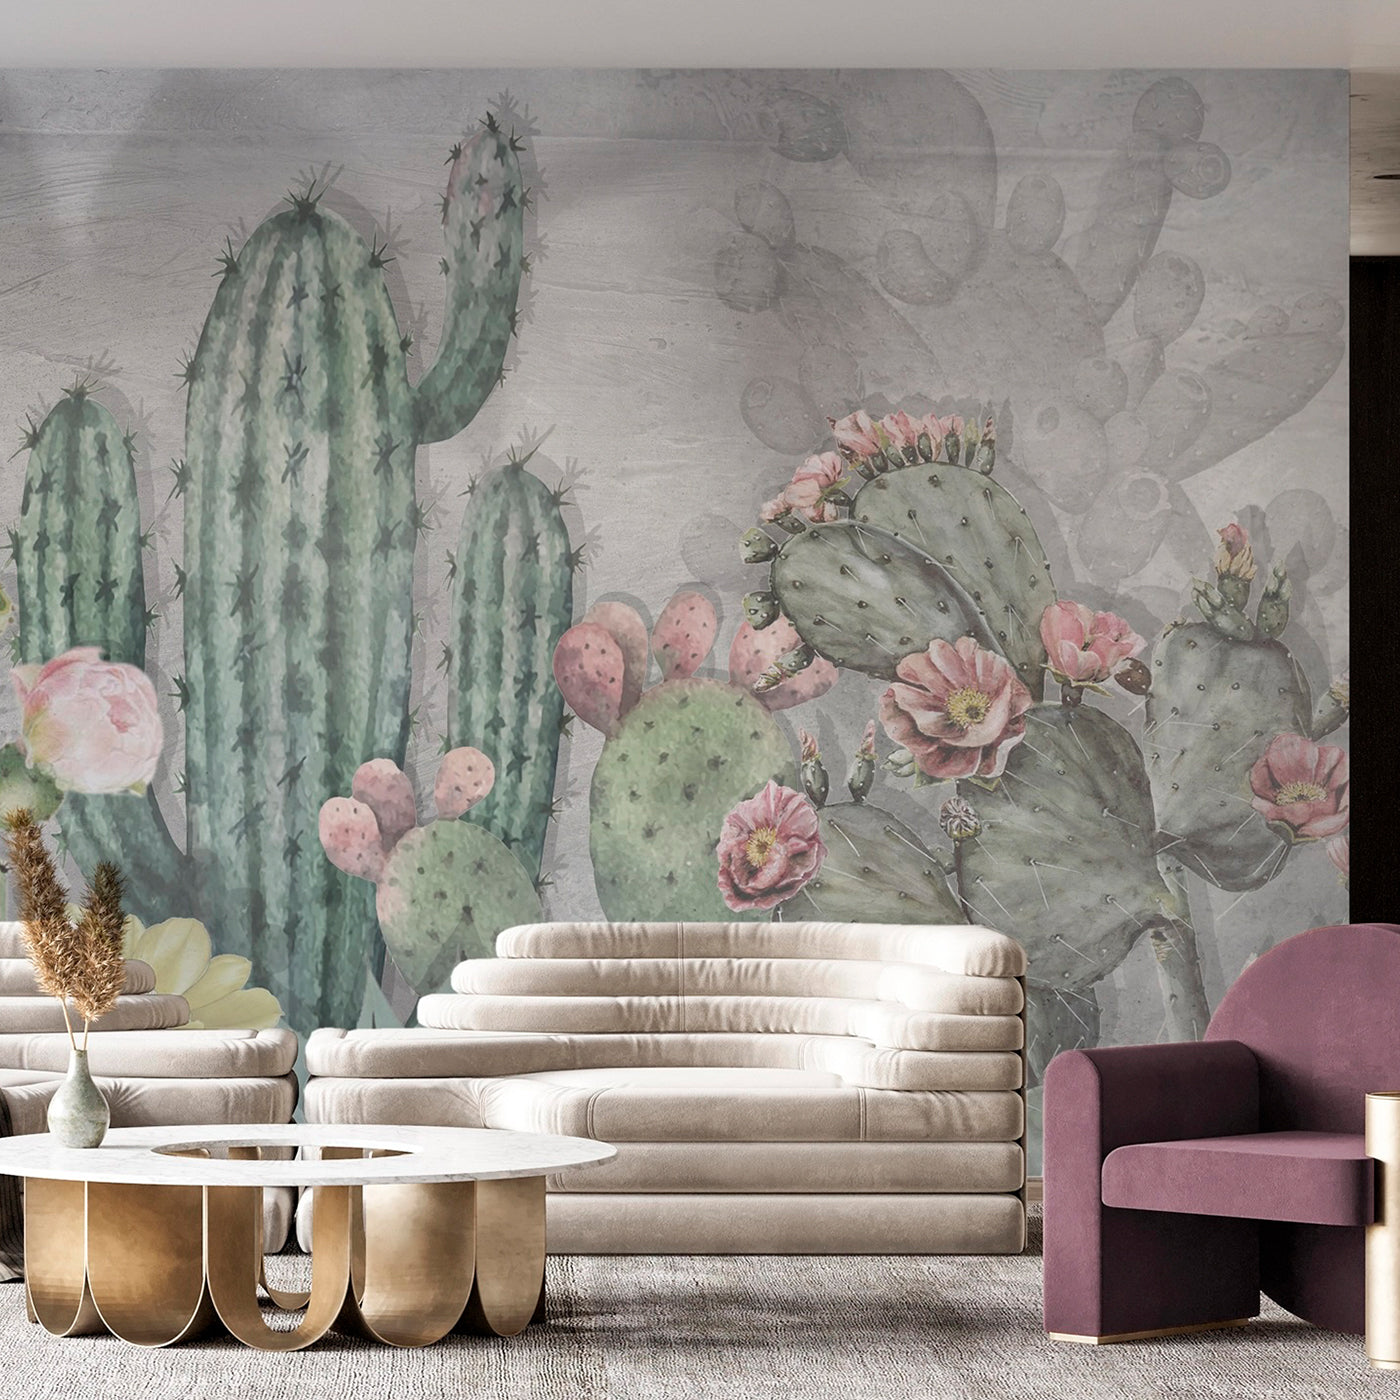 Cactus Panorama Panorama Wallpaper - Alternative view 1